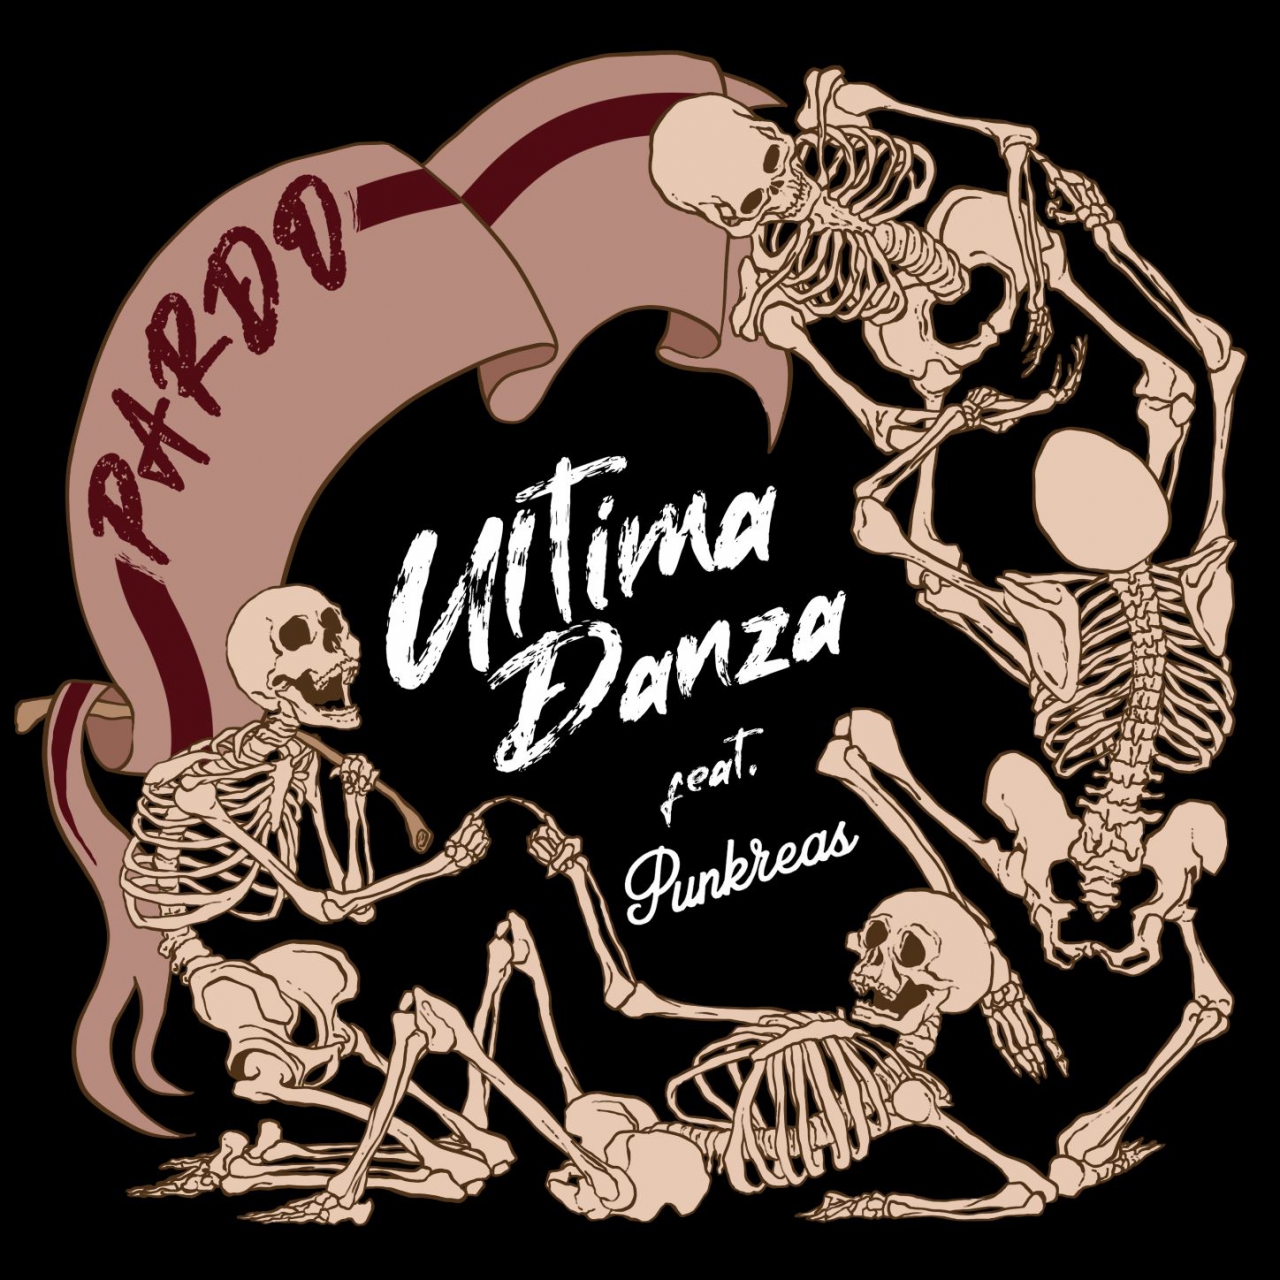 Pardo feat. Punkreas - “Ultima danza”